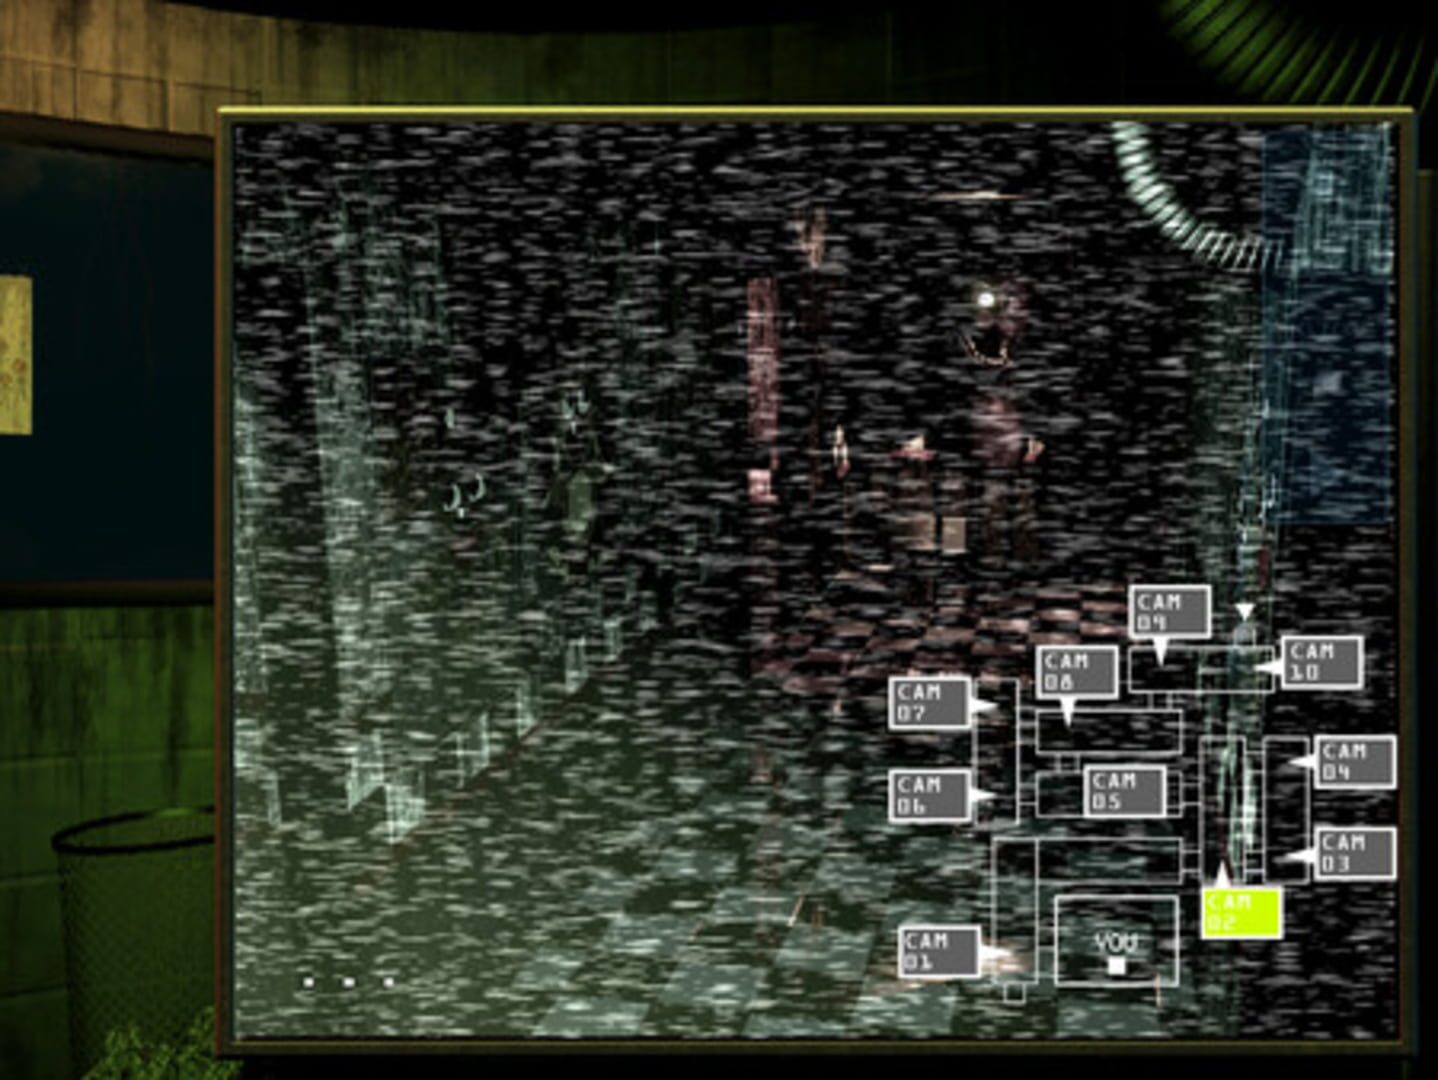 Five Nights at Freddy's 3 screenshot